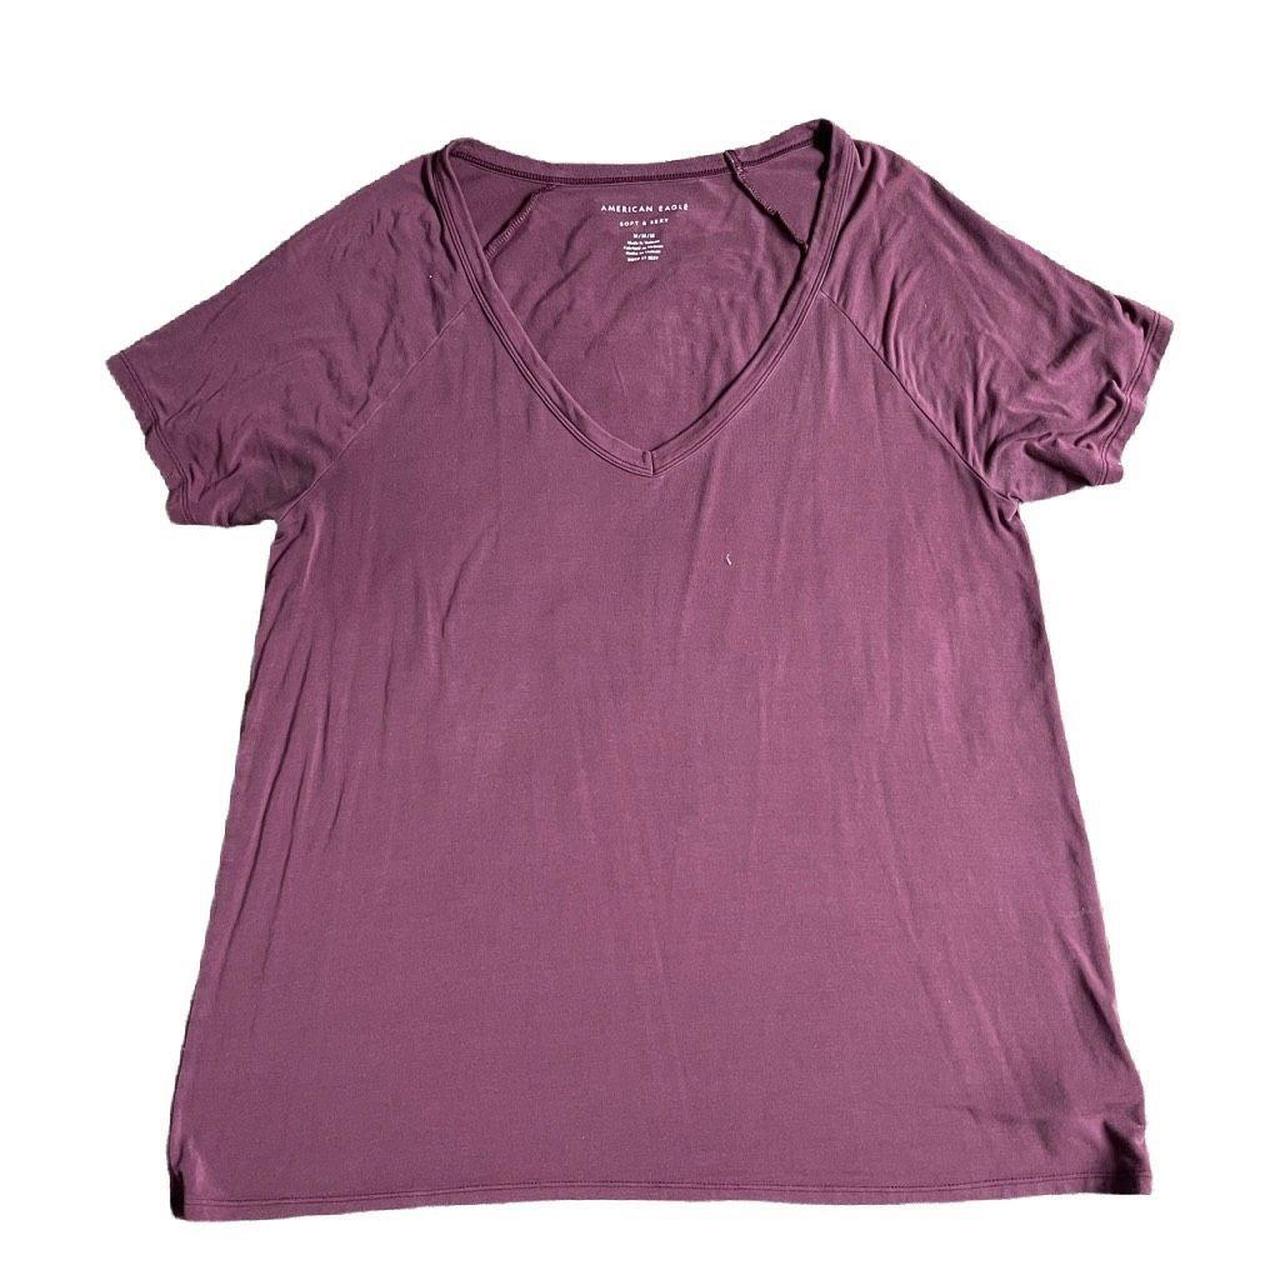 Women's Soft & Sexy T-Shirts